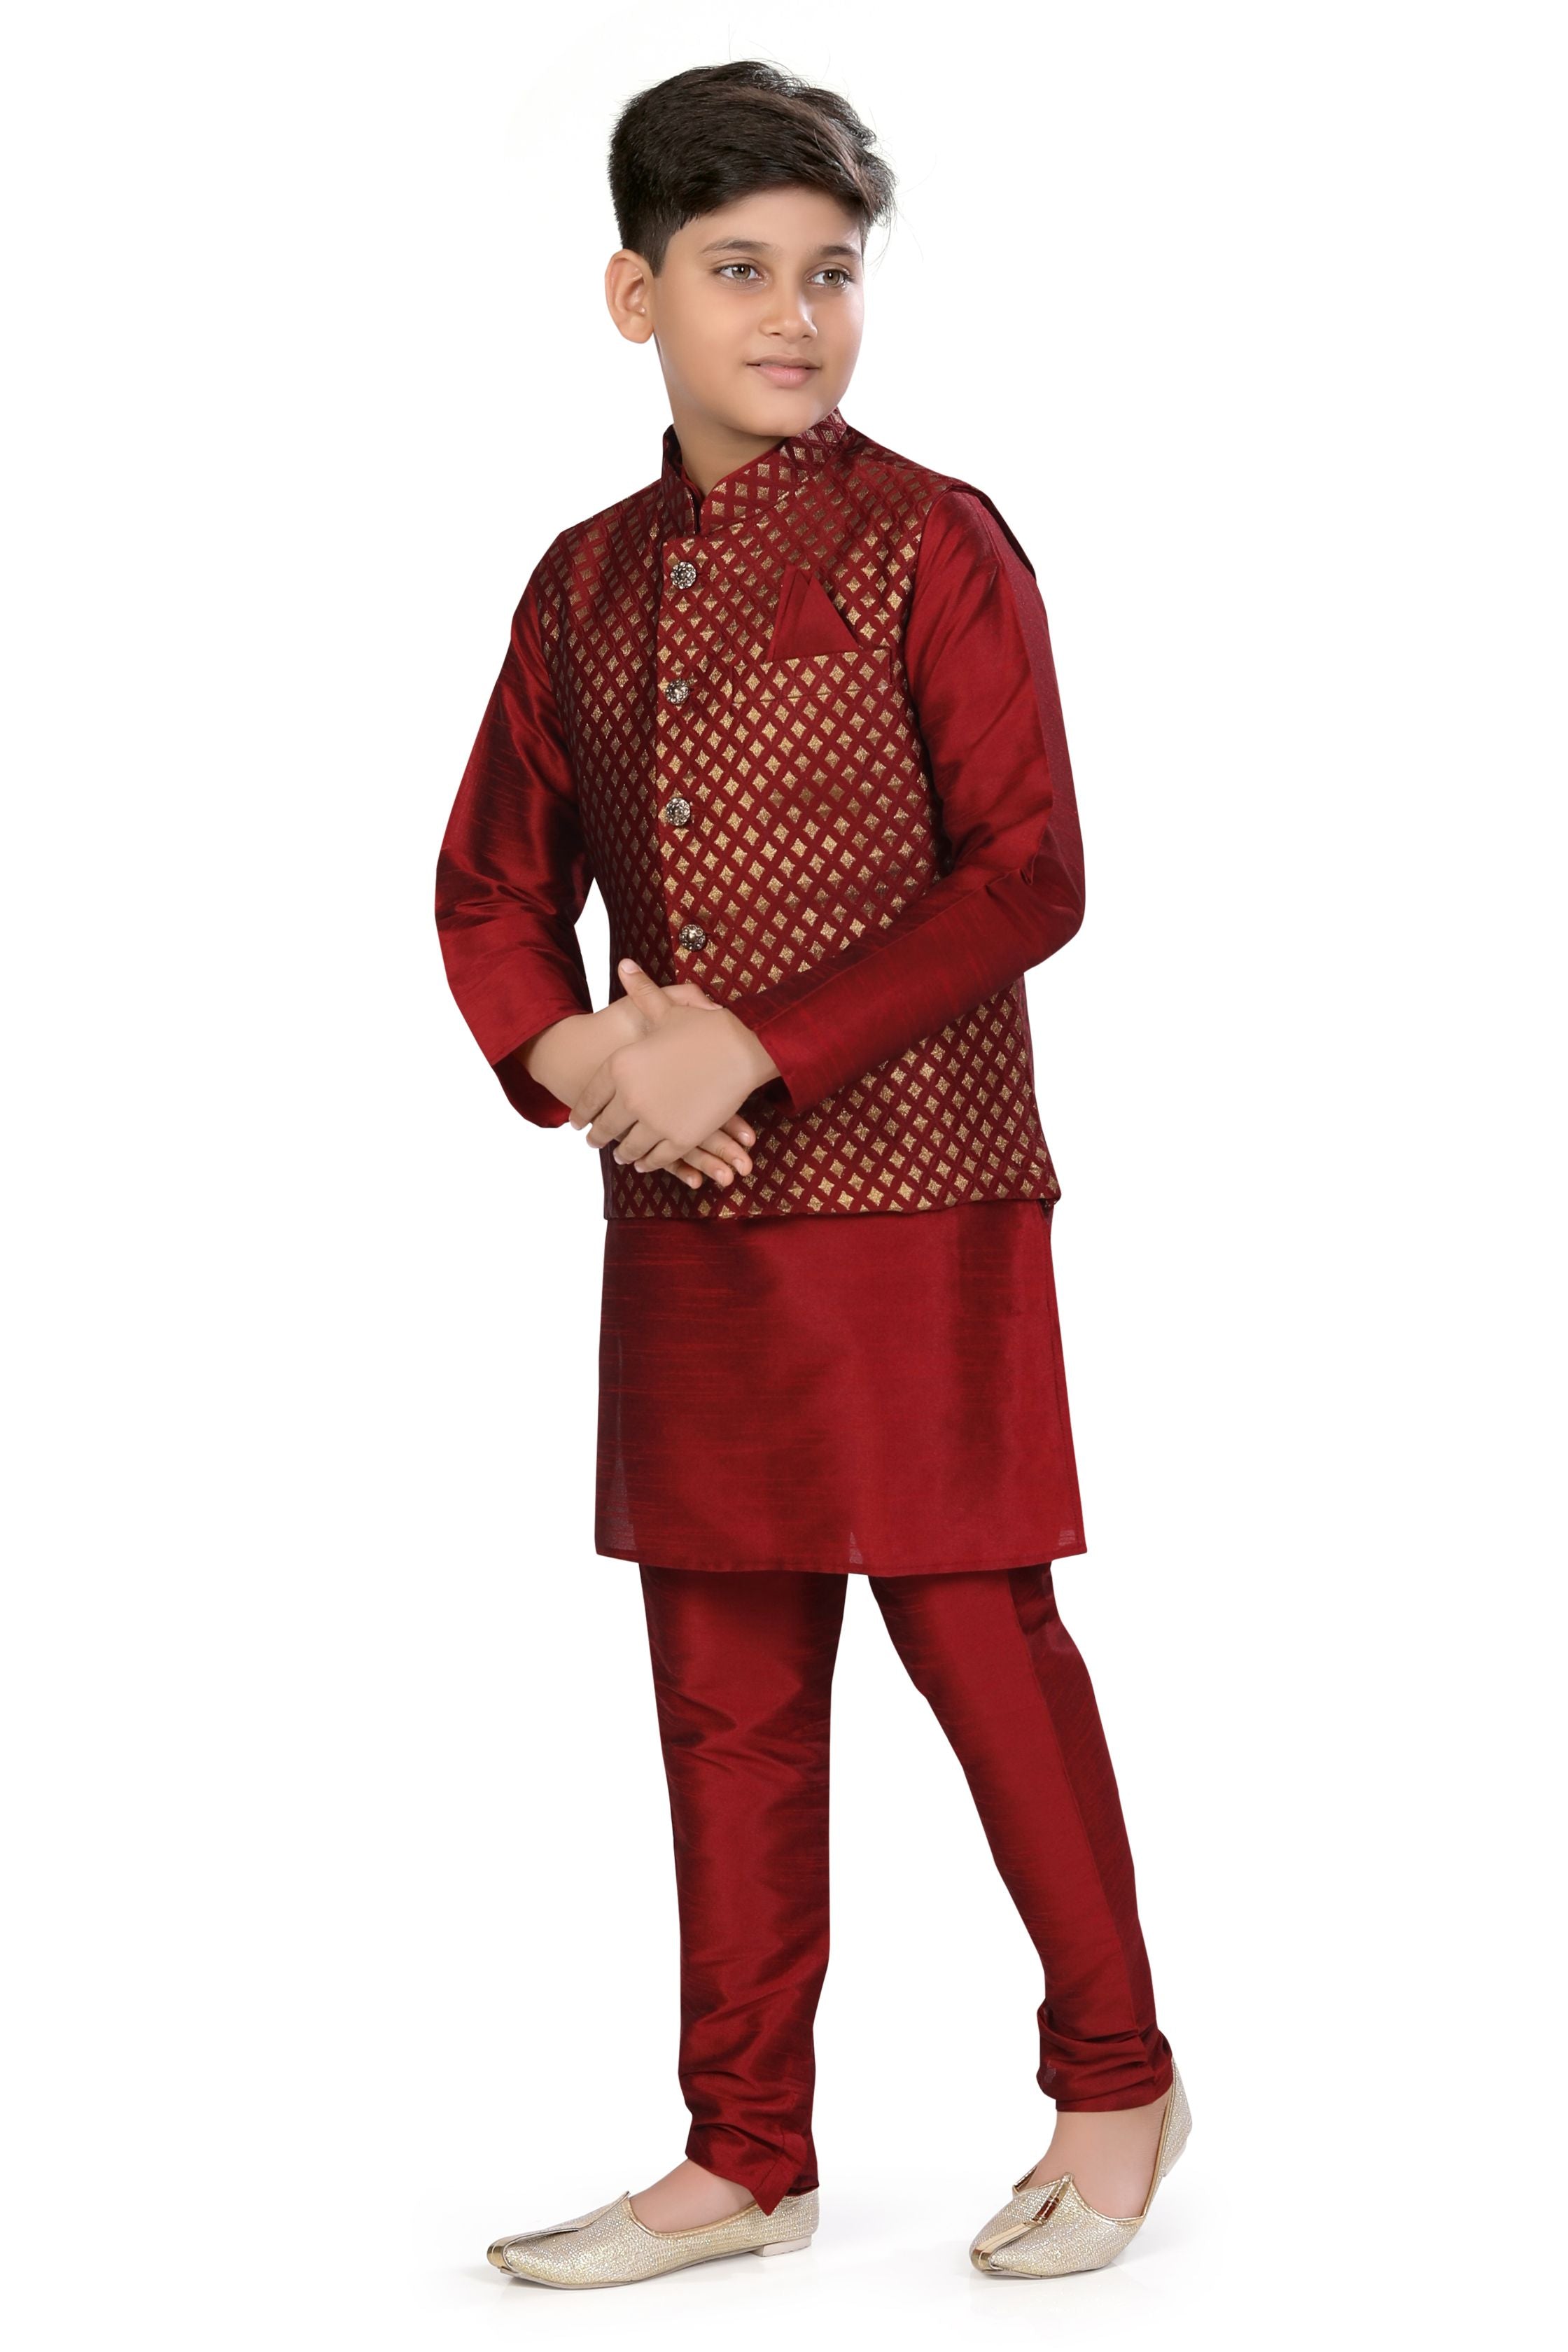 Boys Banarasi Brocade Vest Coat Set in Maroon Colour - Premium 3 pieces Vest coat suit from Dapper Ethnic - Just $79! Shop now at Dulhan Exclusives